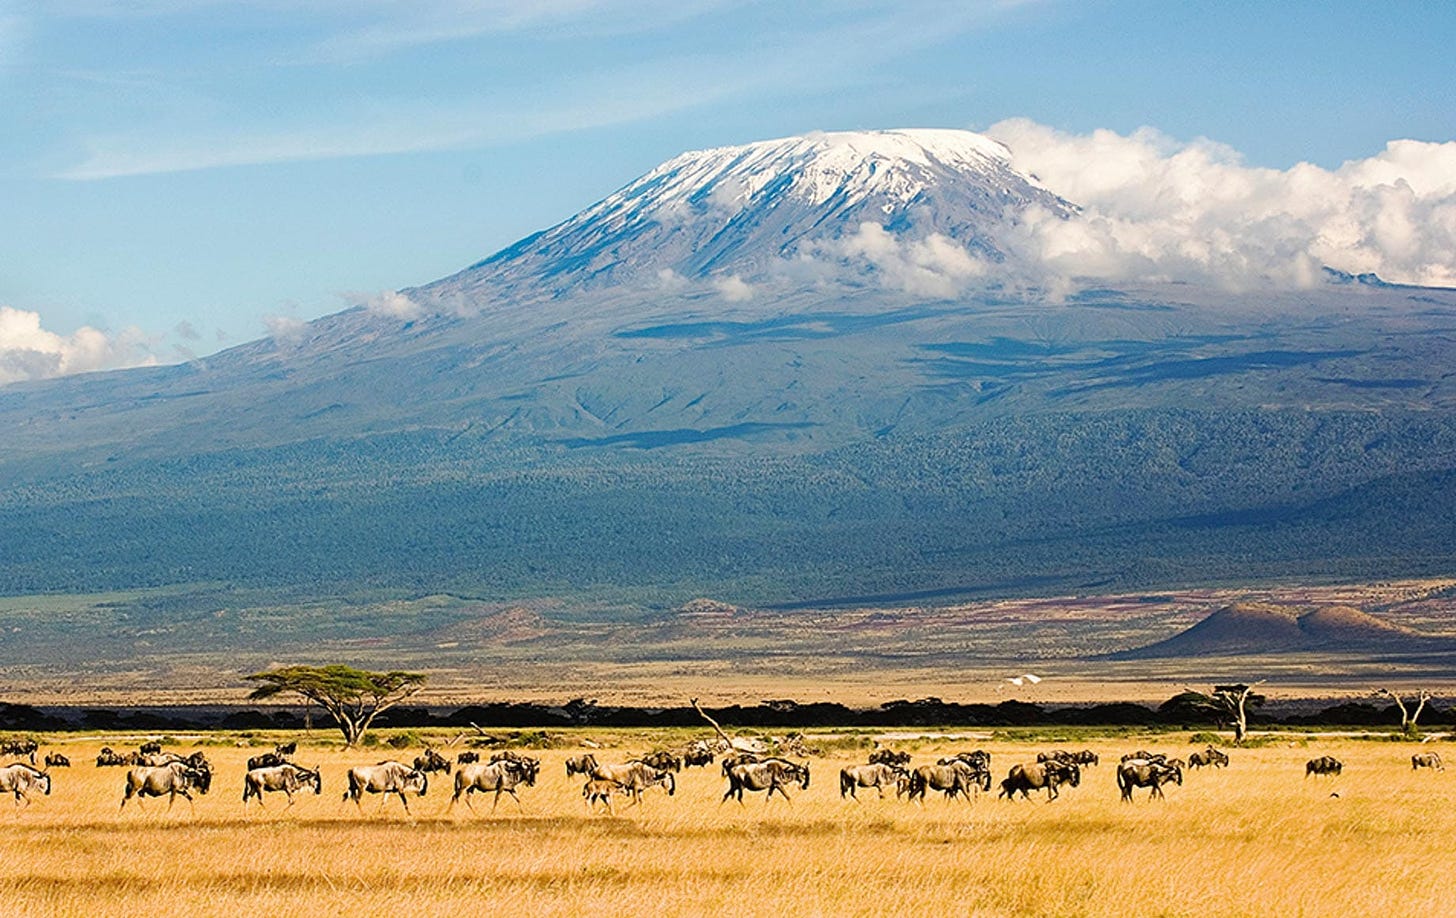 Mount Kilimanjaro - Africa Destination - Micato Safaris